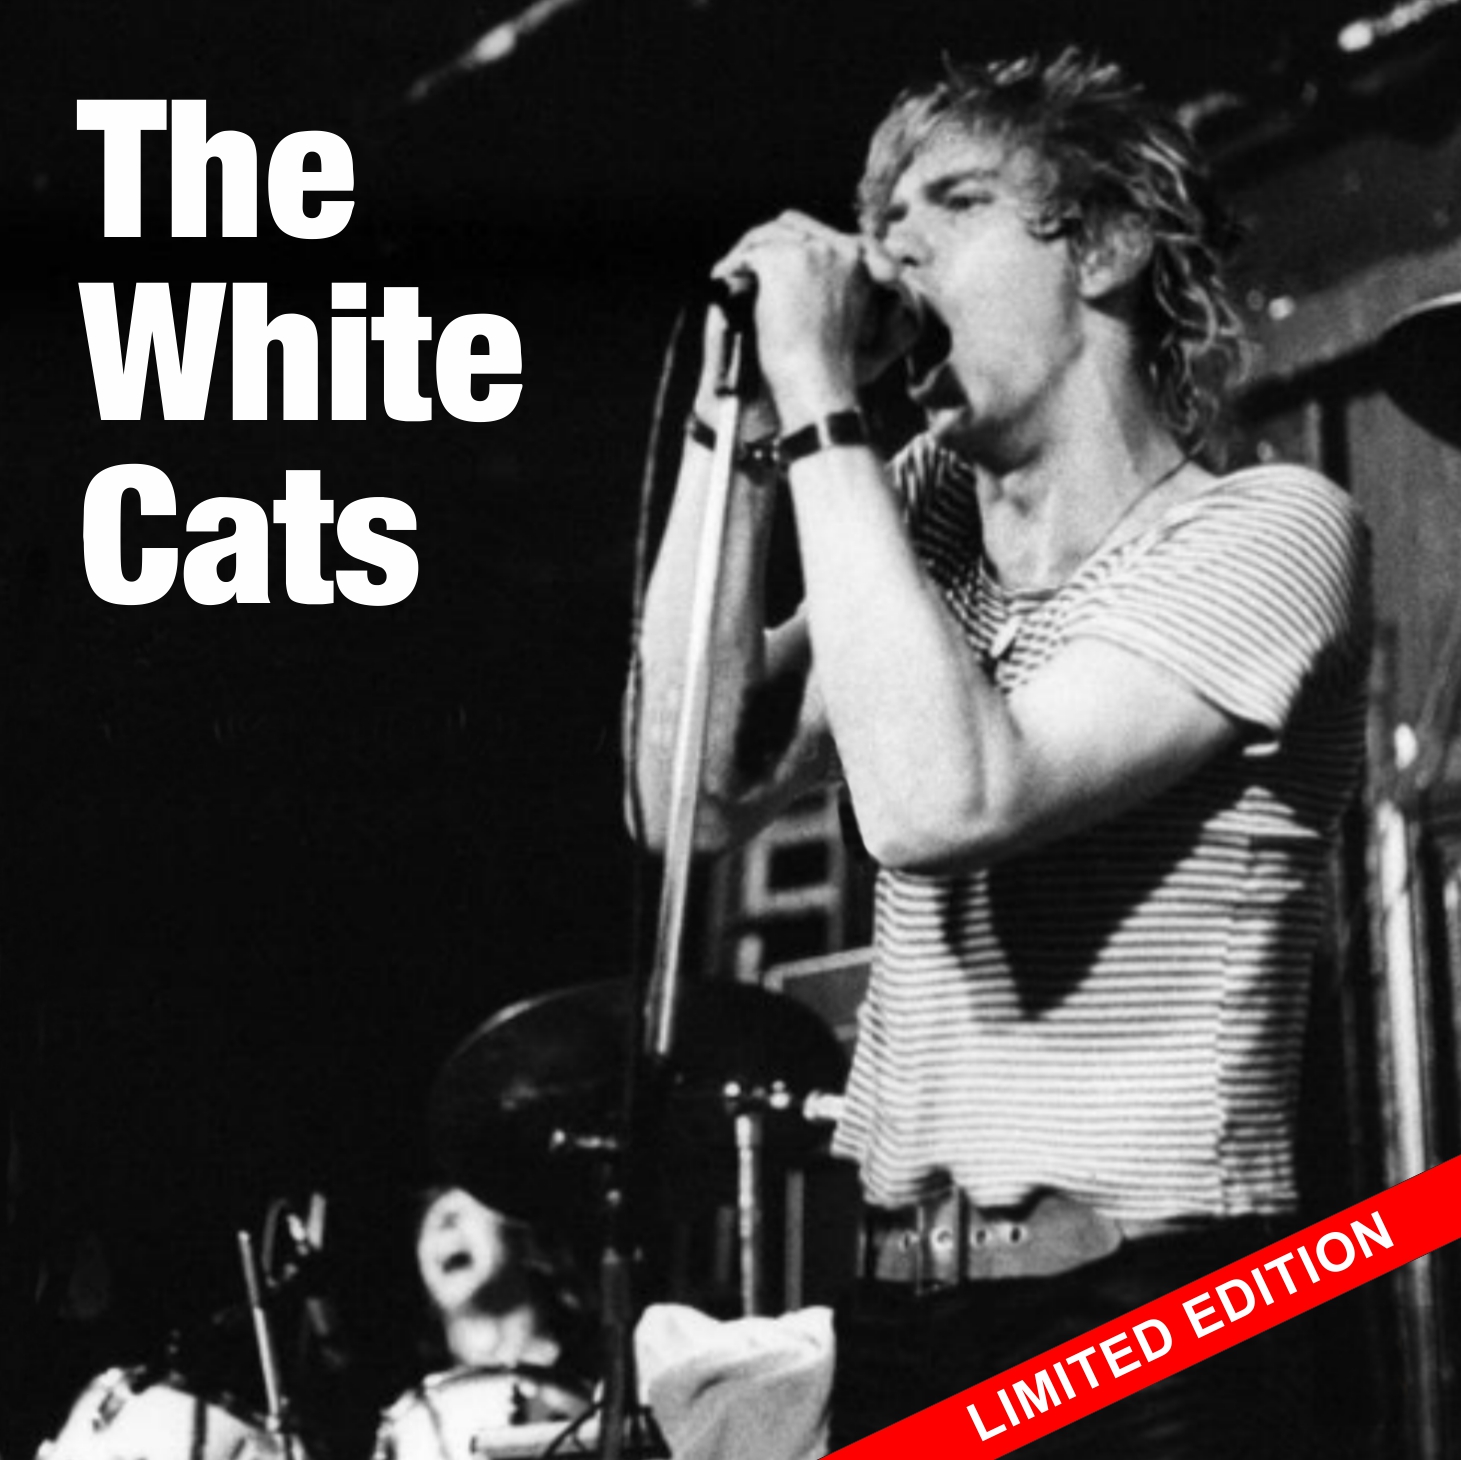 White Cats